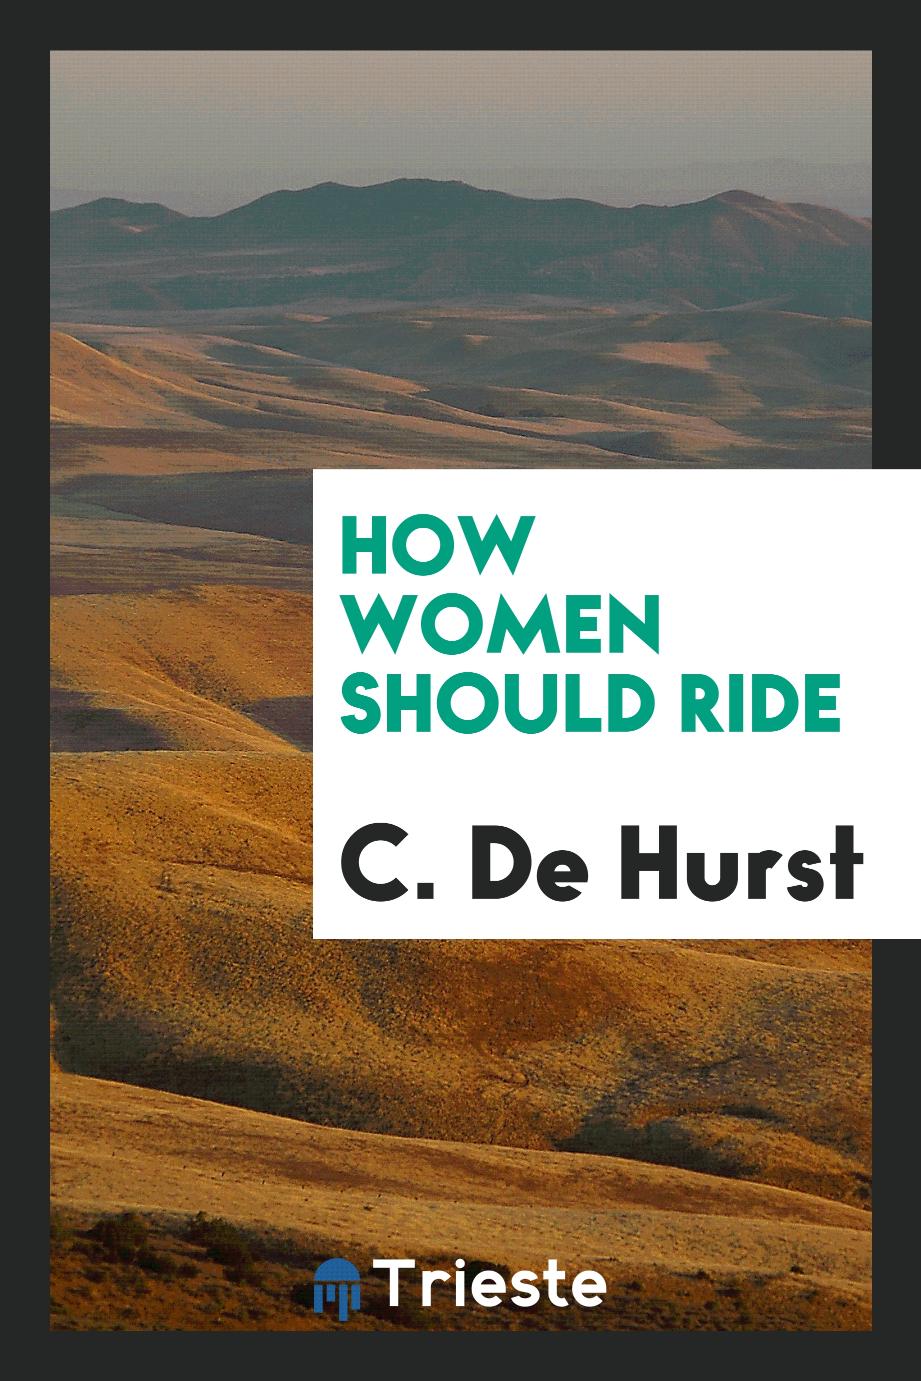 How women should ride